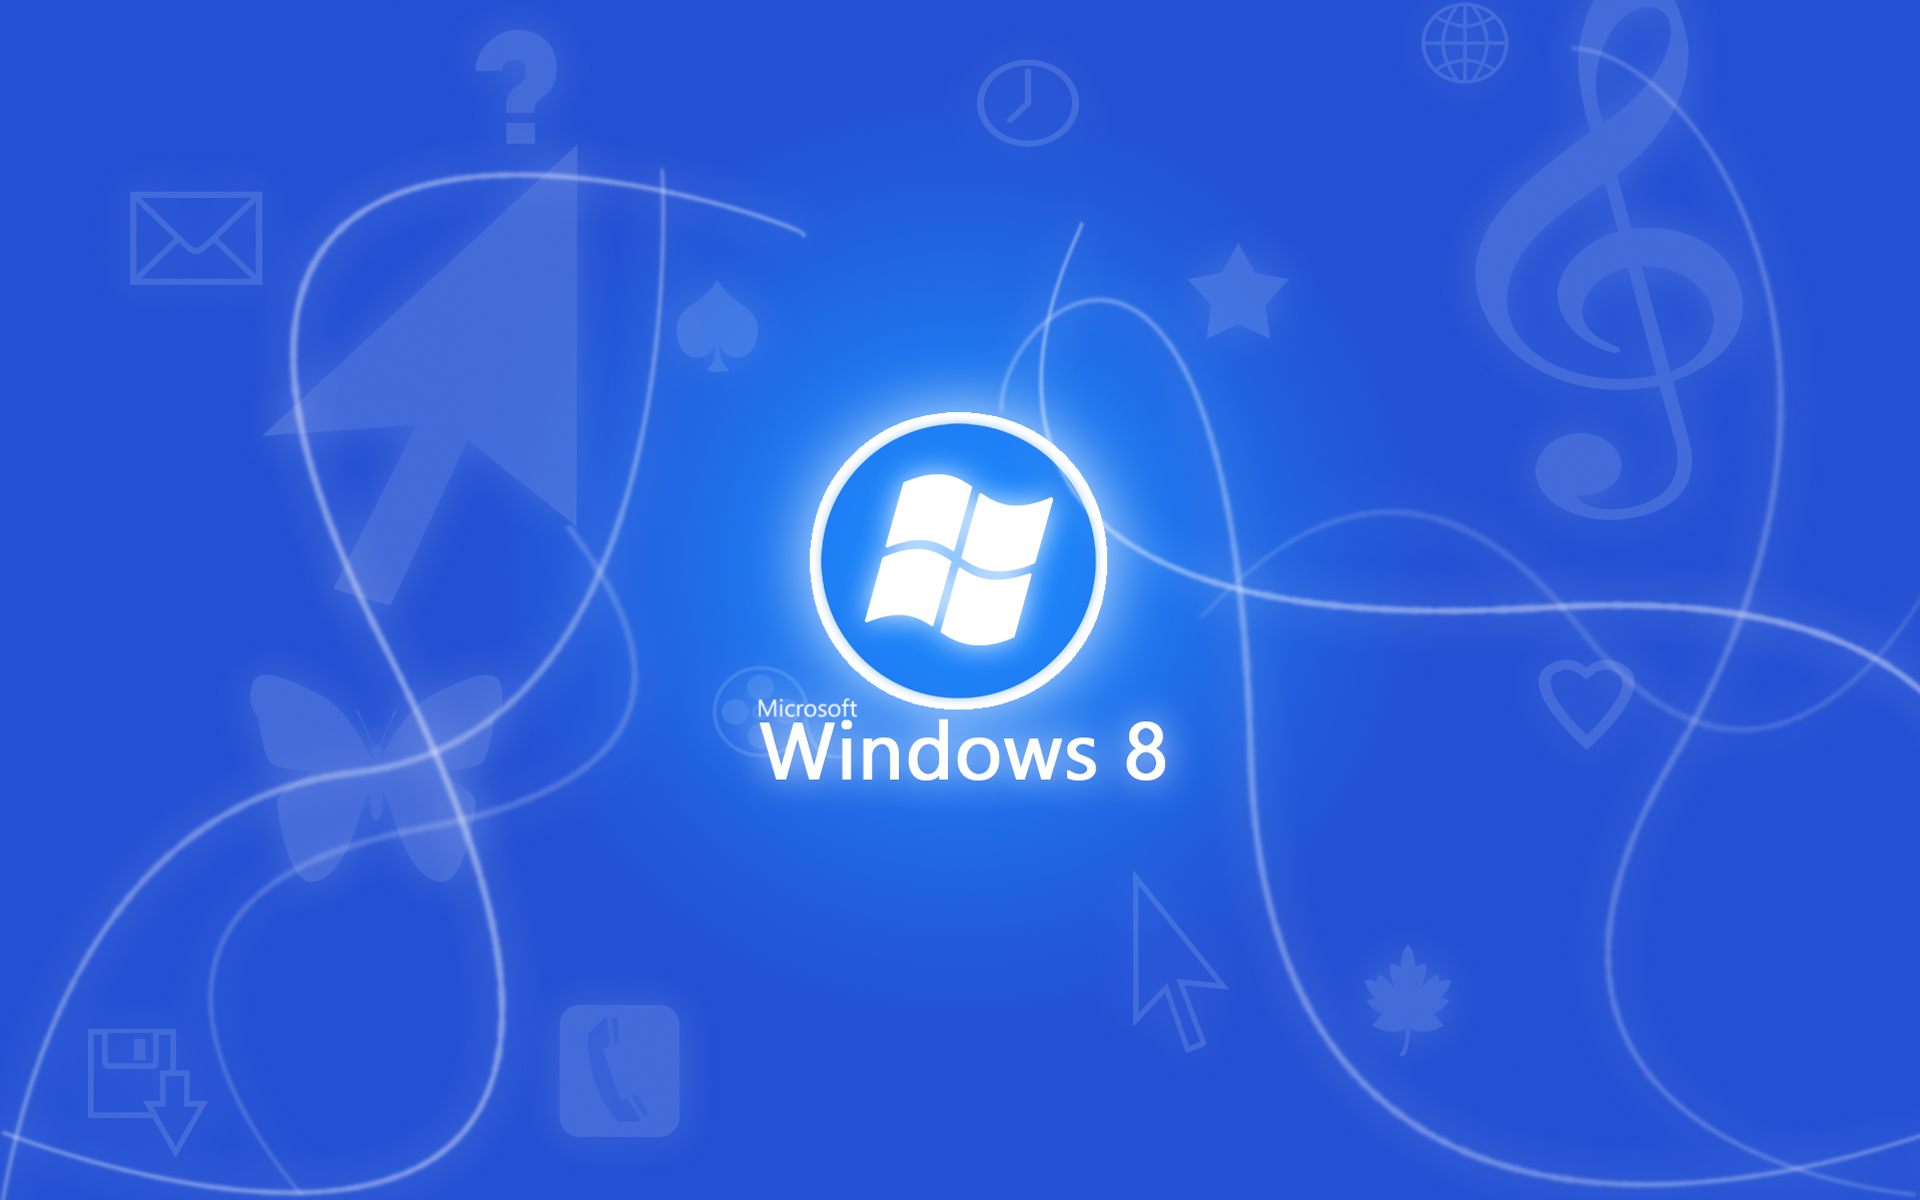 windows 8 wallpaper hd 1080p free download #23